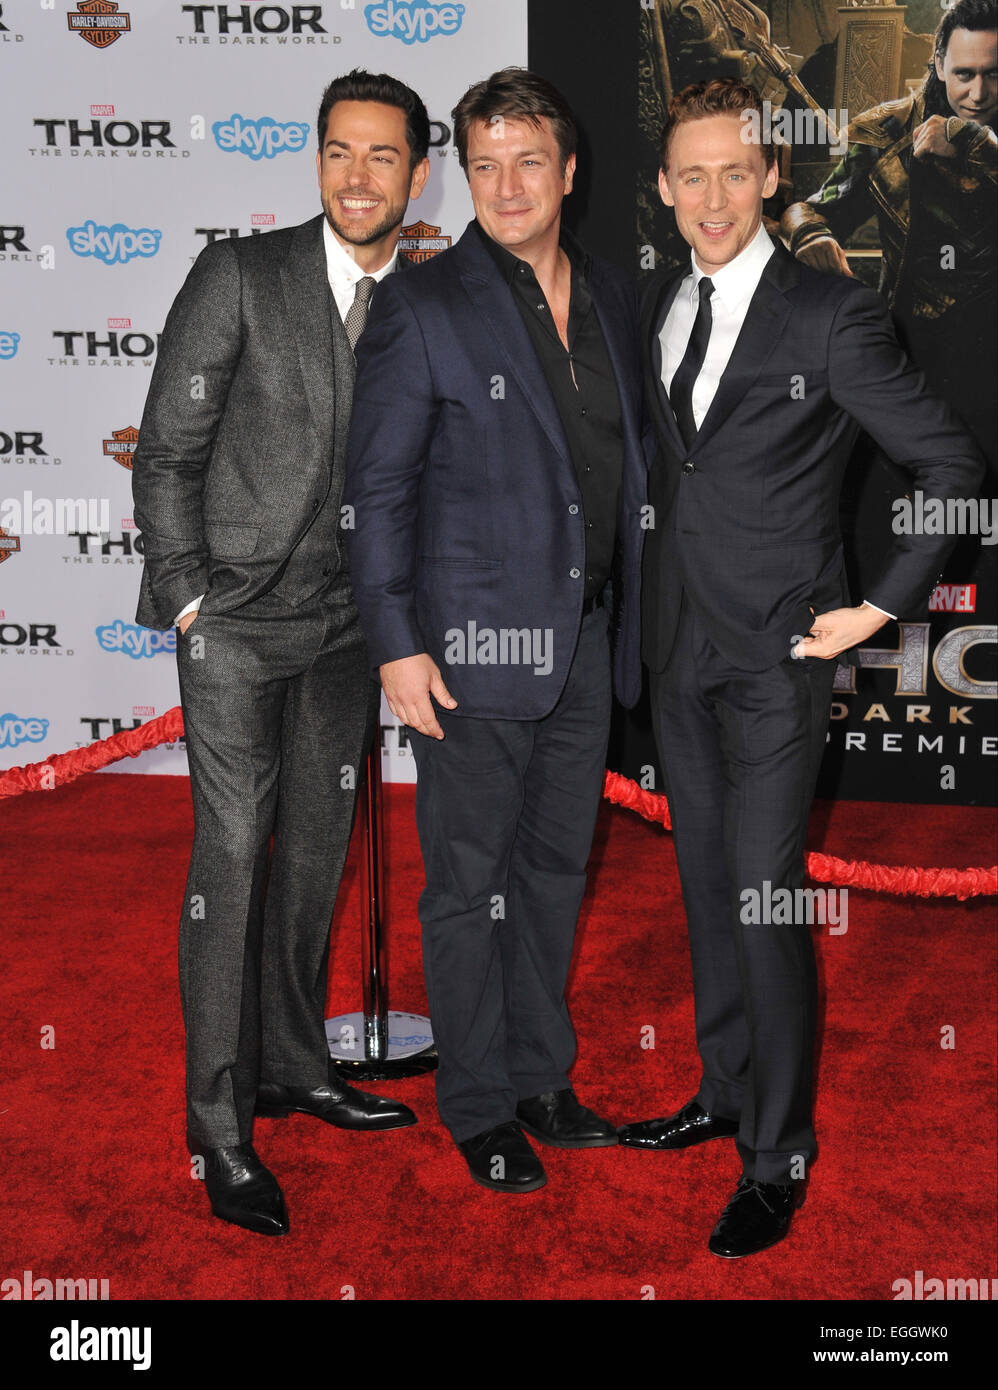 Los Angeles Ca November 4 2013 Zachary Levi And Nathan Fillion And Tom Hiddleston At The Us